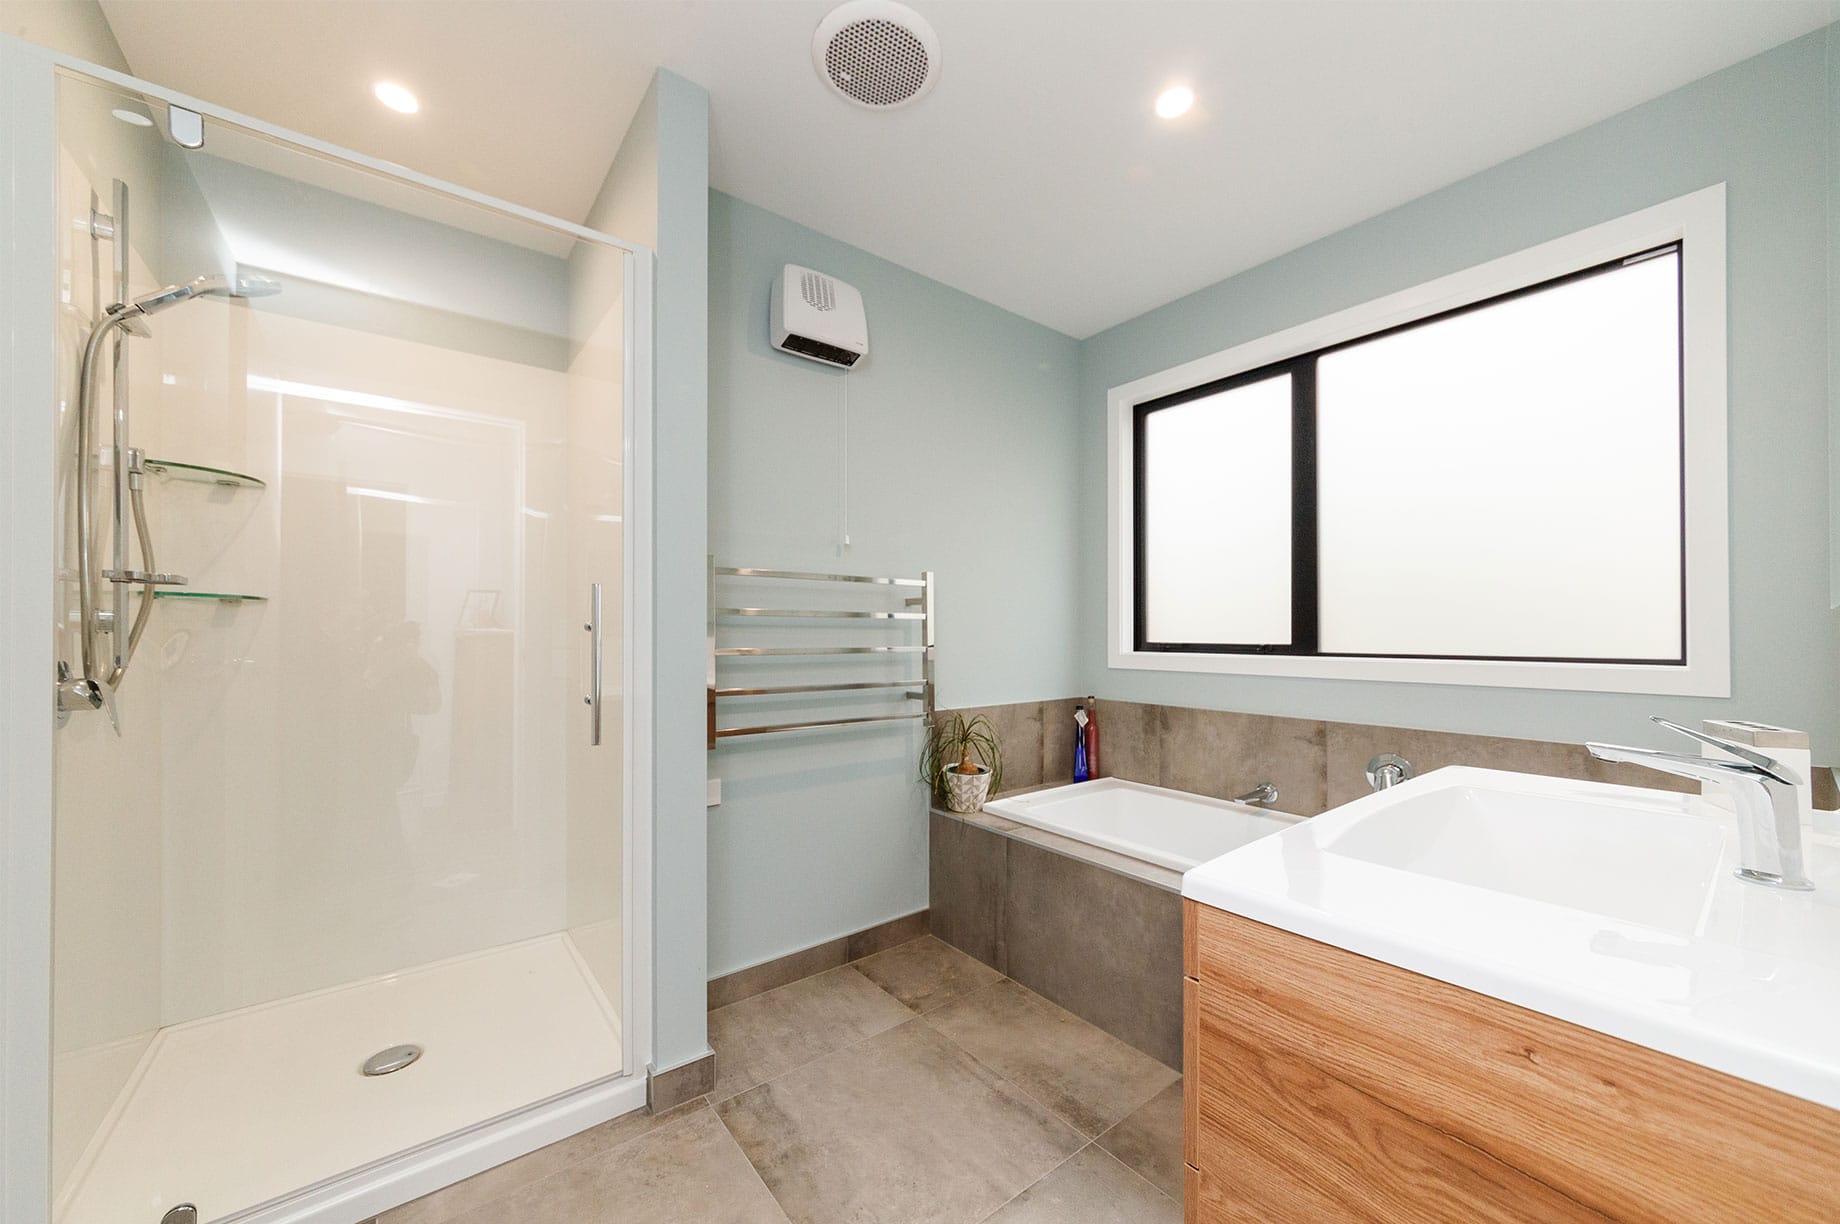 Bathroom interior with light blue coloured walls